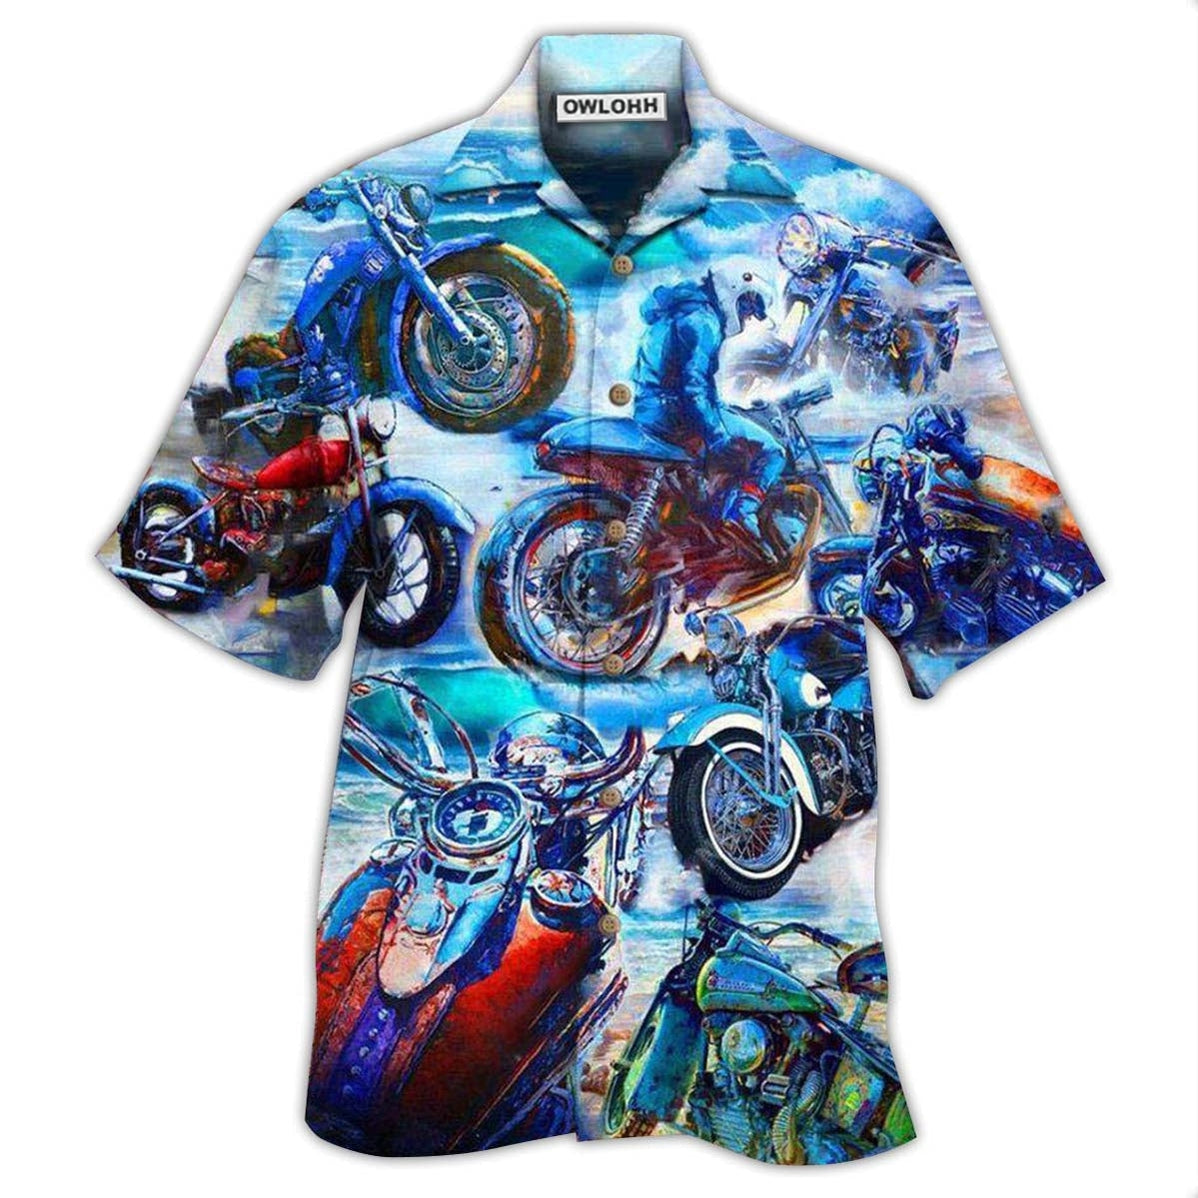 Hawaiian Shirt / Adults / S Motorcycle Let's Take A Ride To The Beach Blue Style - Hawaiian Shirt - Owls Matrix LTD